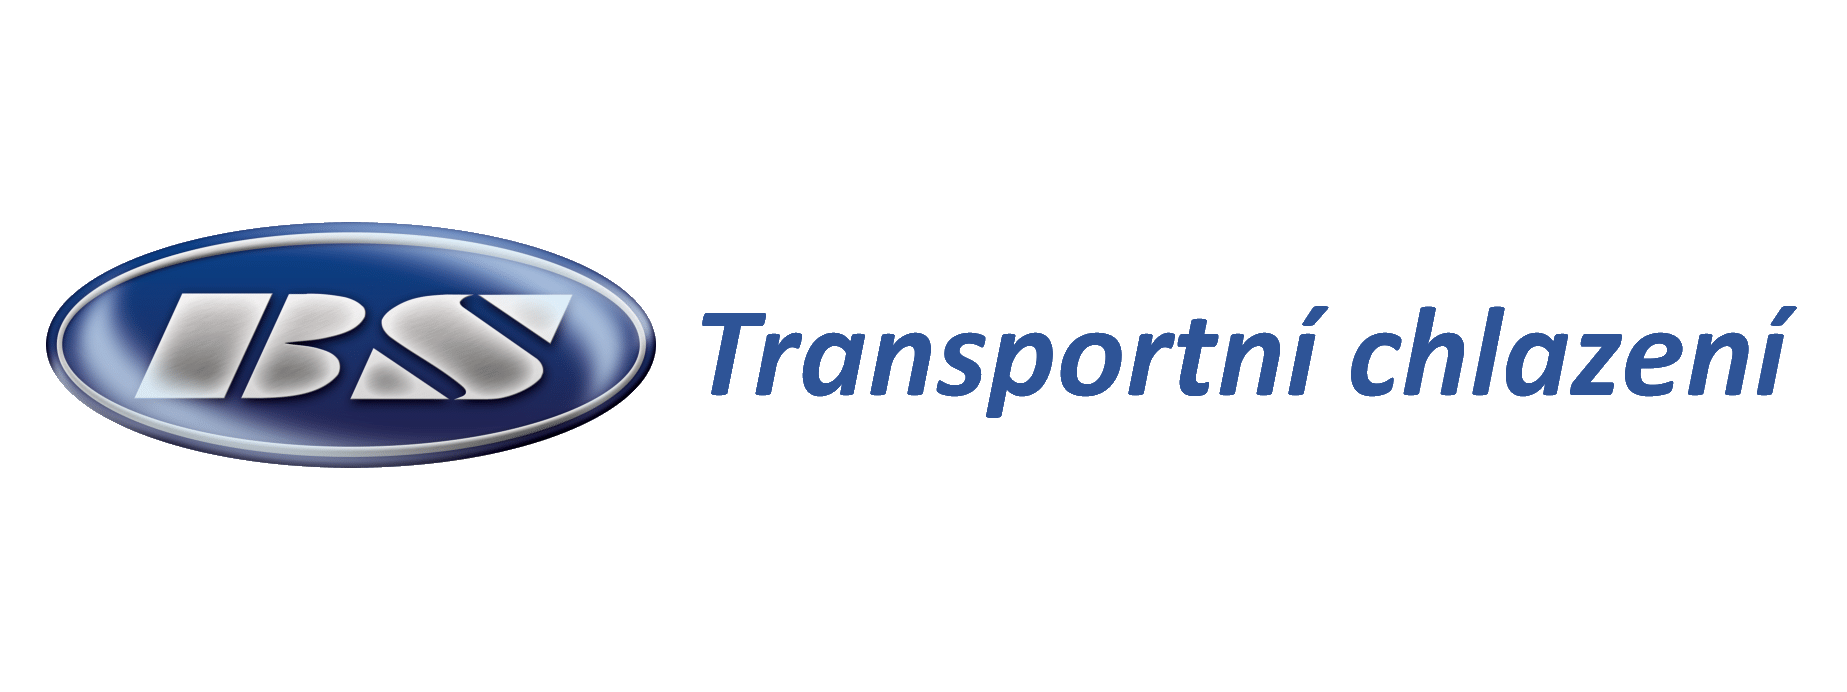 BS Transport chlazen